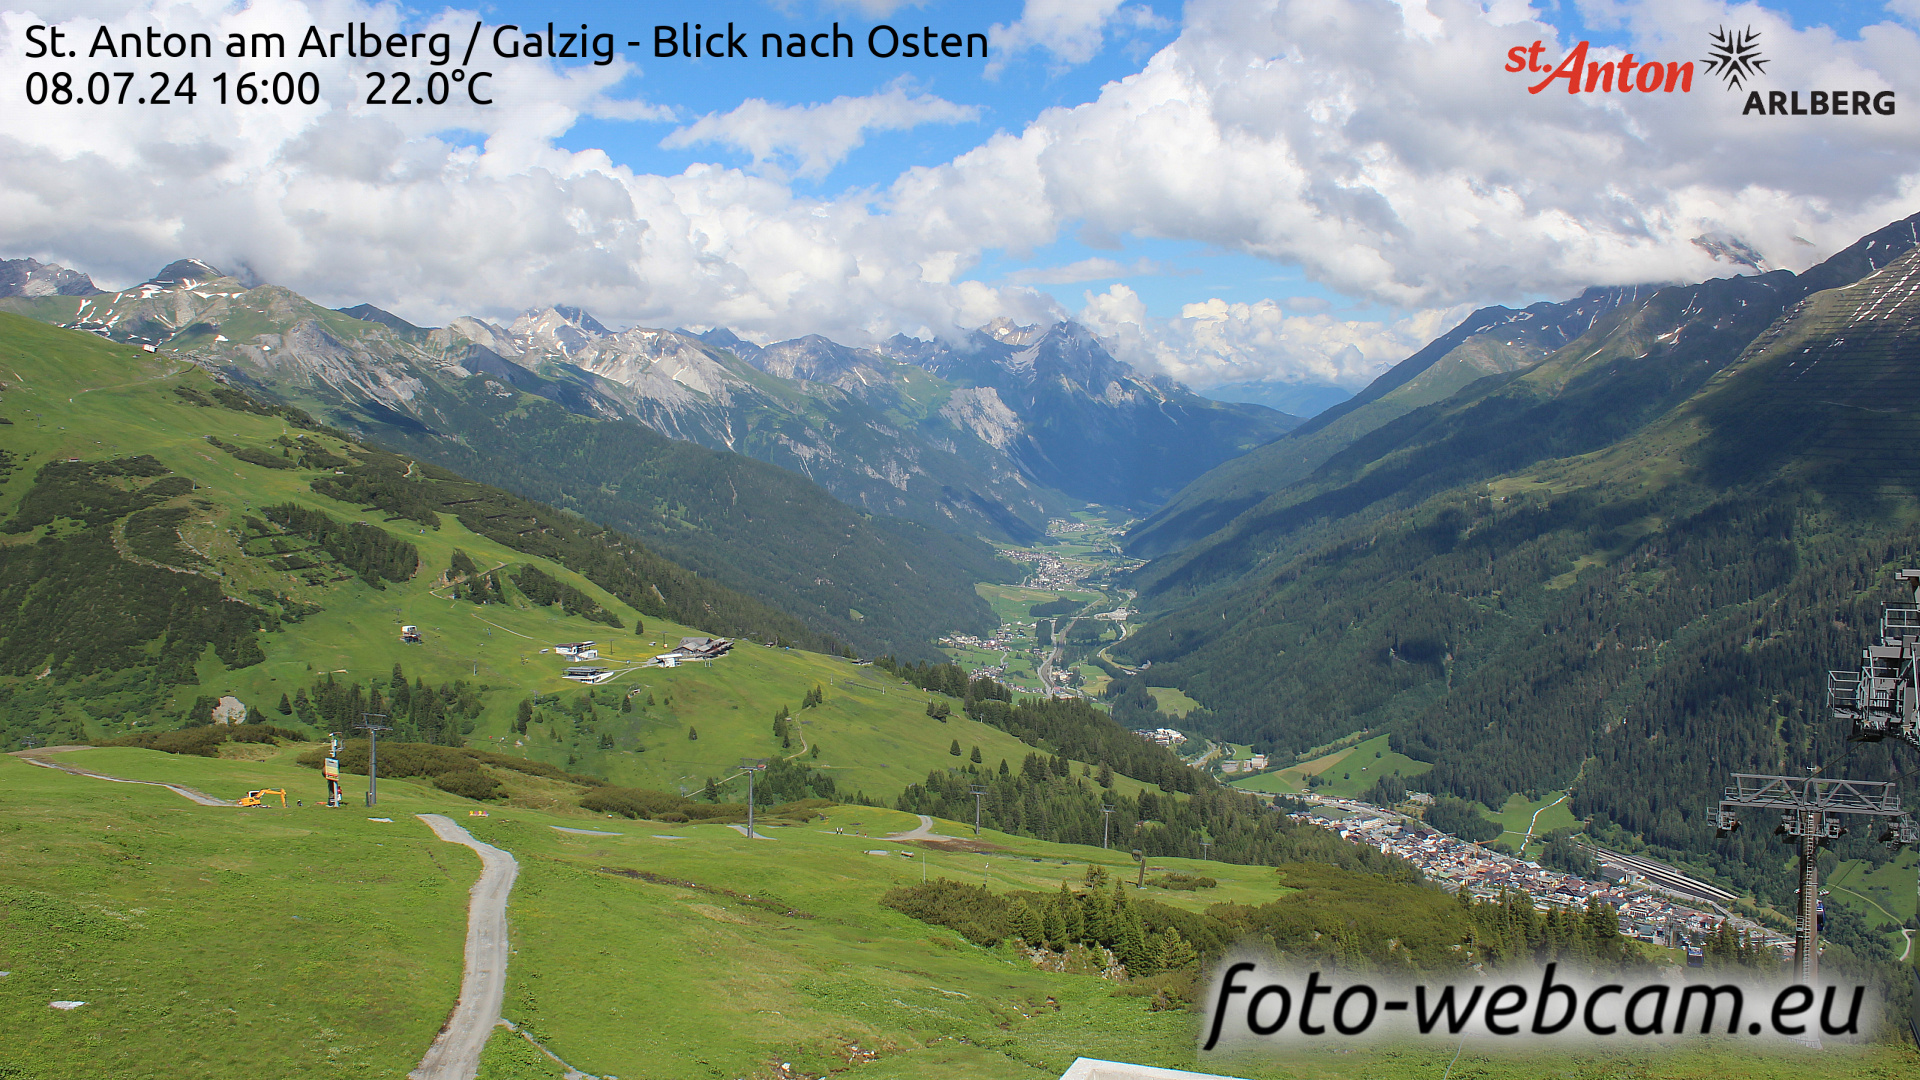 St. Anton am Arlberg Thu. 16:01